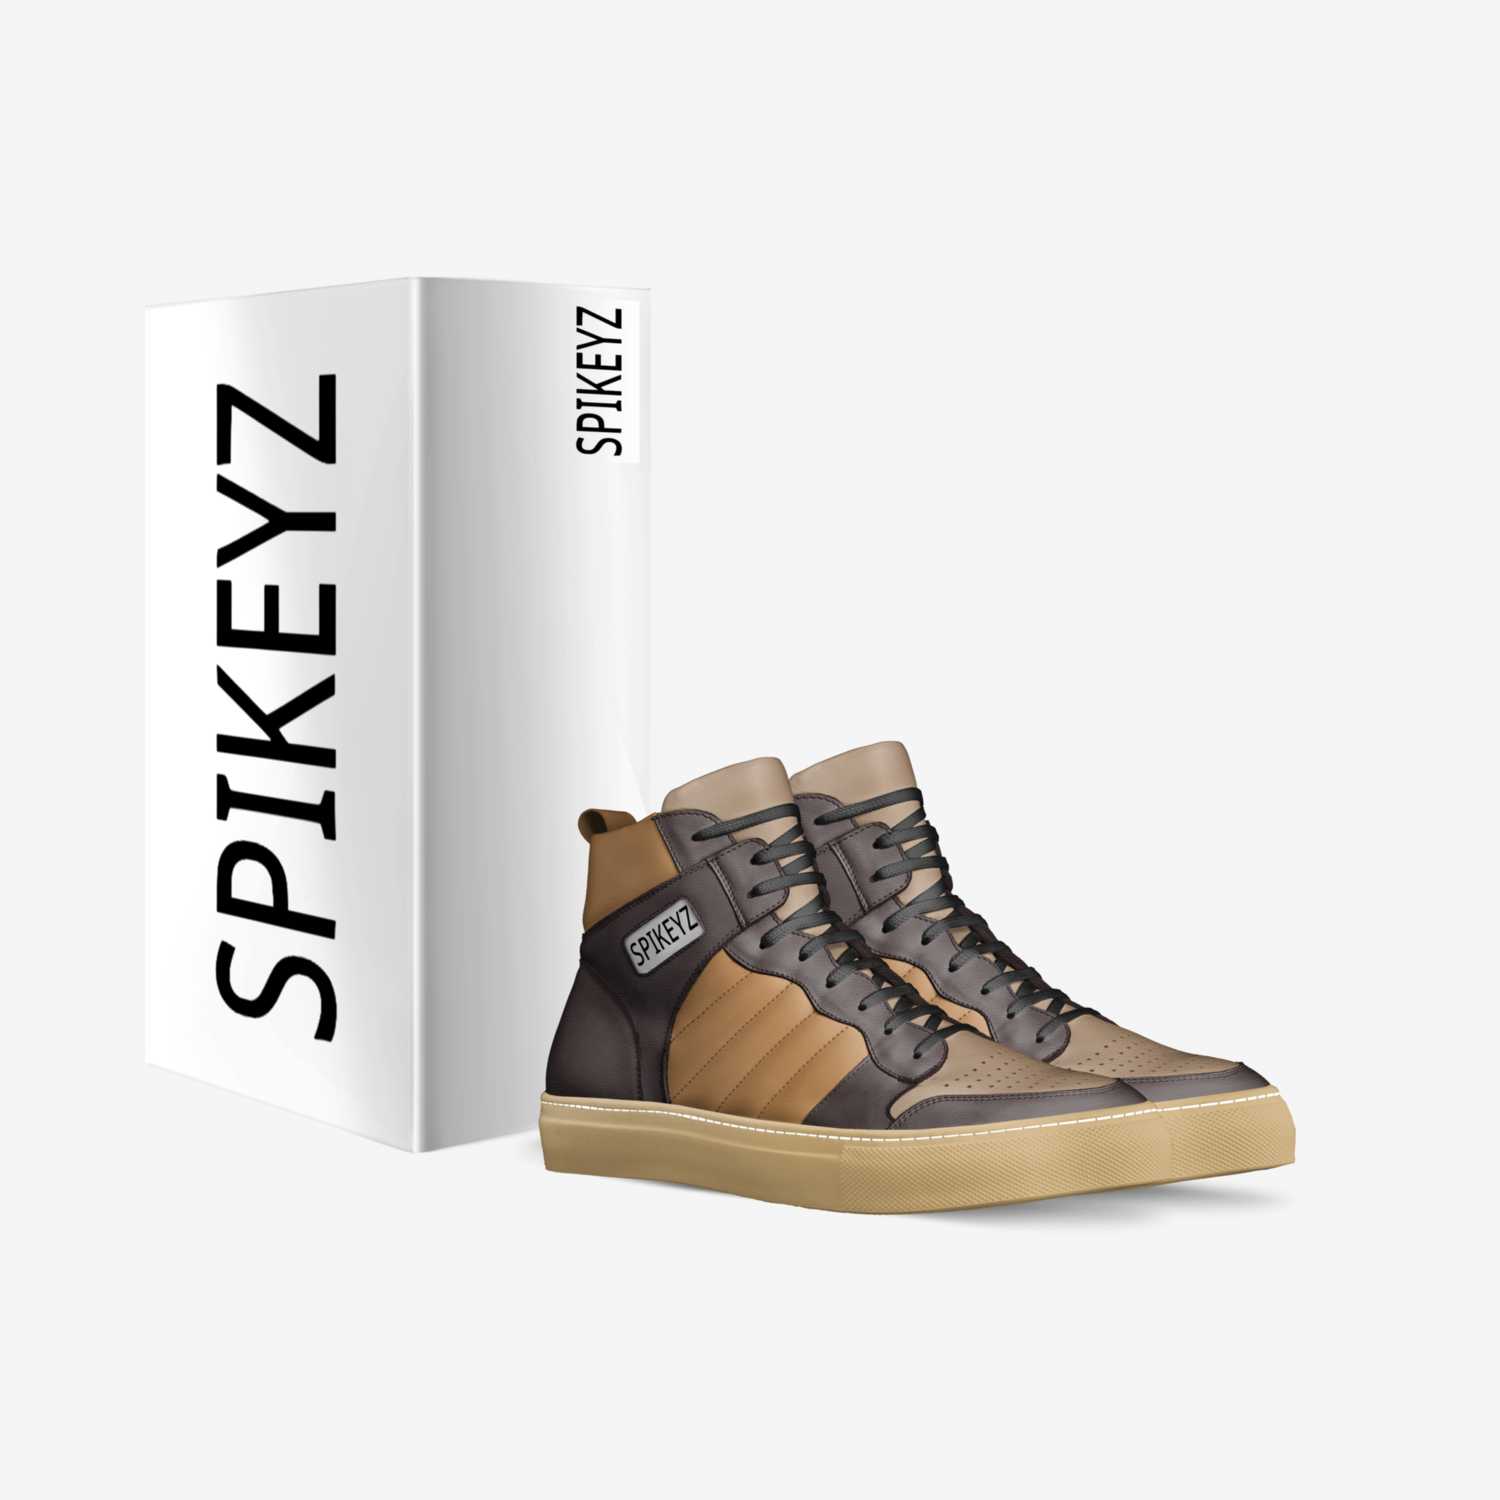 SPIKEYZ custom made in Italy shoes by Sebastian Gonzalez | Box view